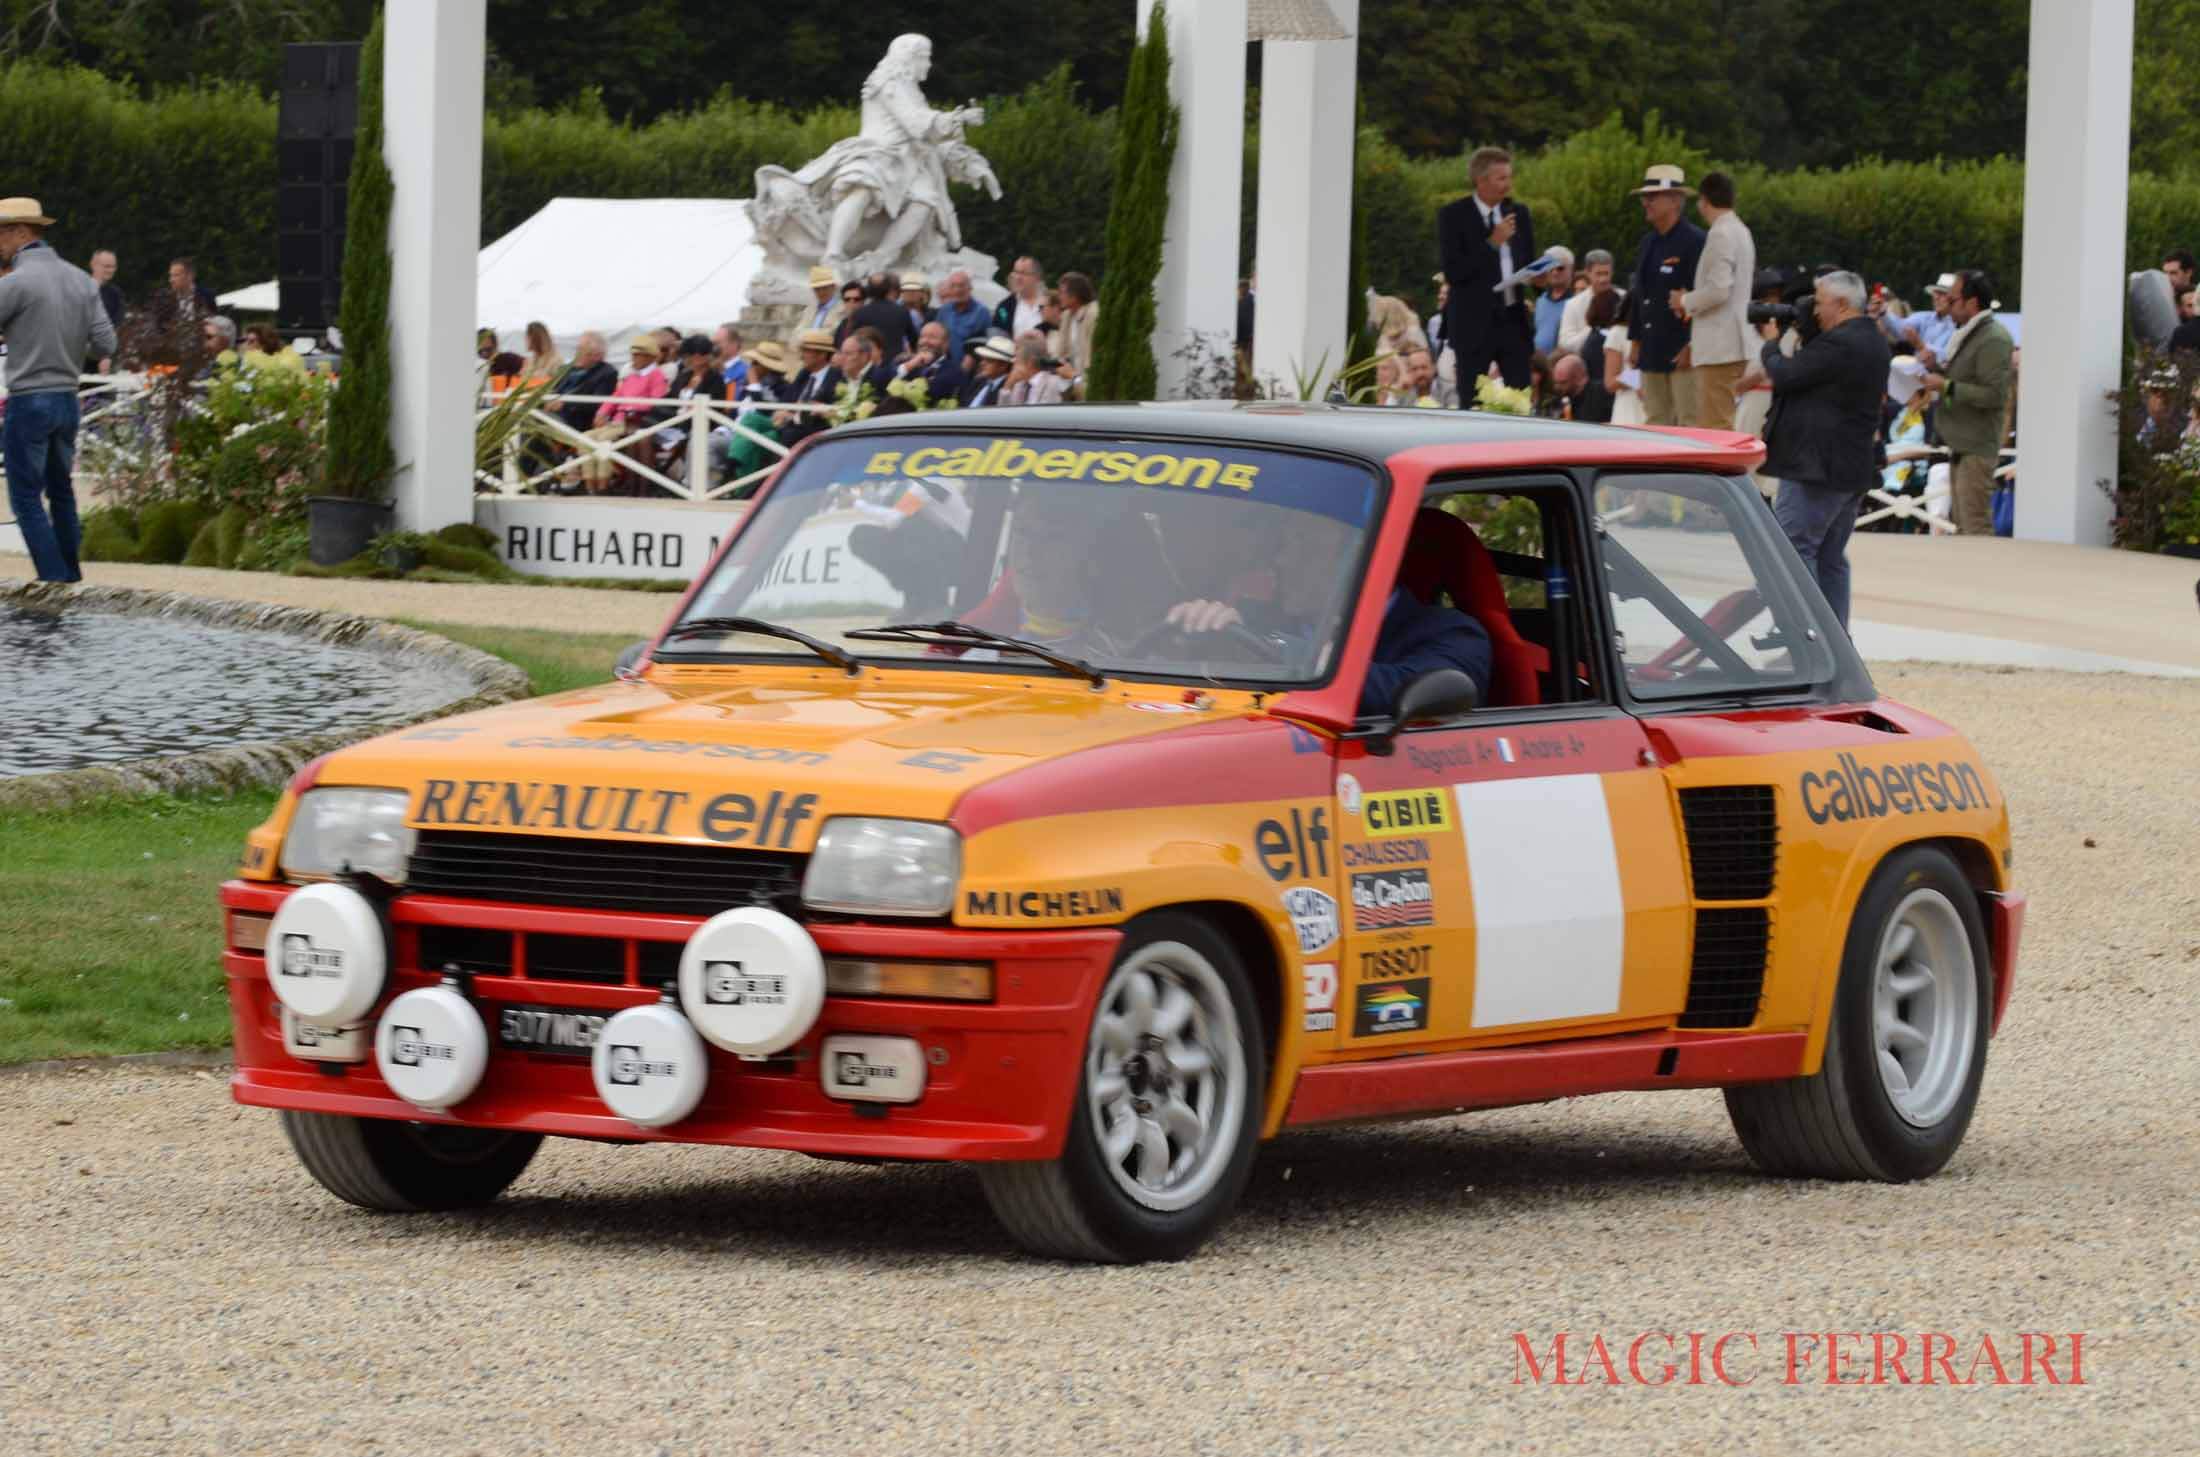 Renault 5 Turbo Groupe IV